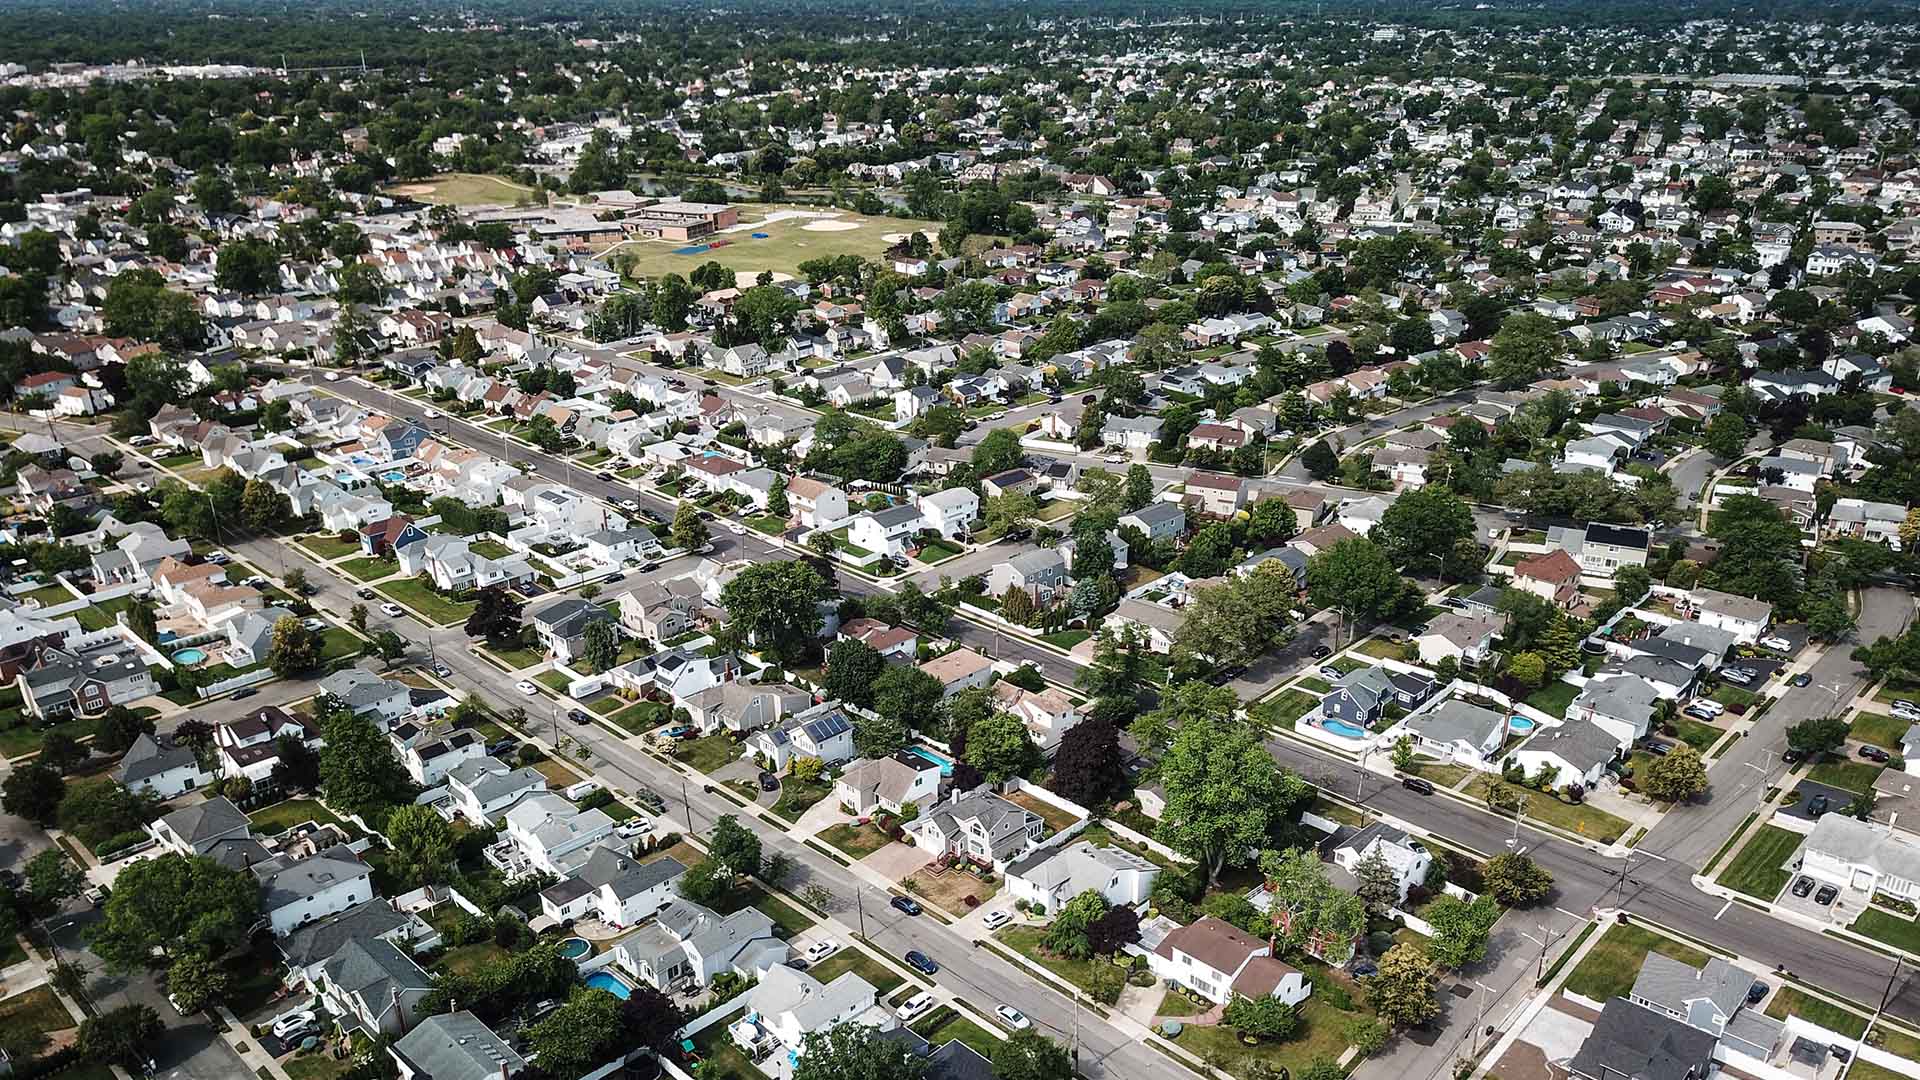 Aerial view of homes in Merrick, New York